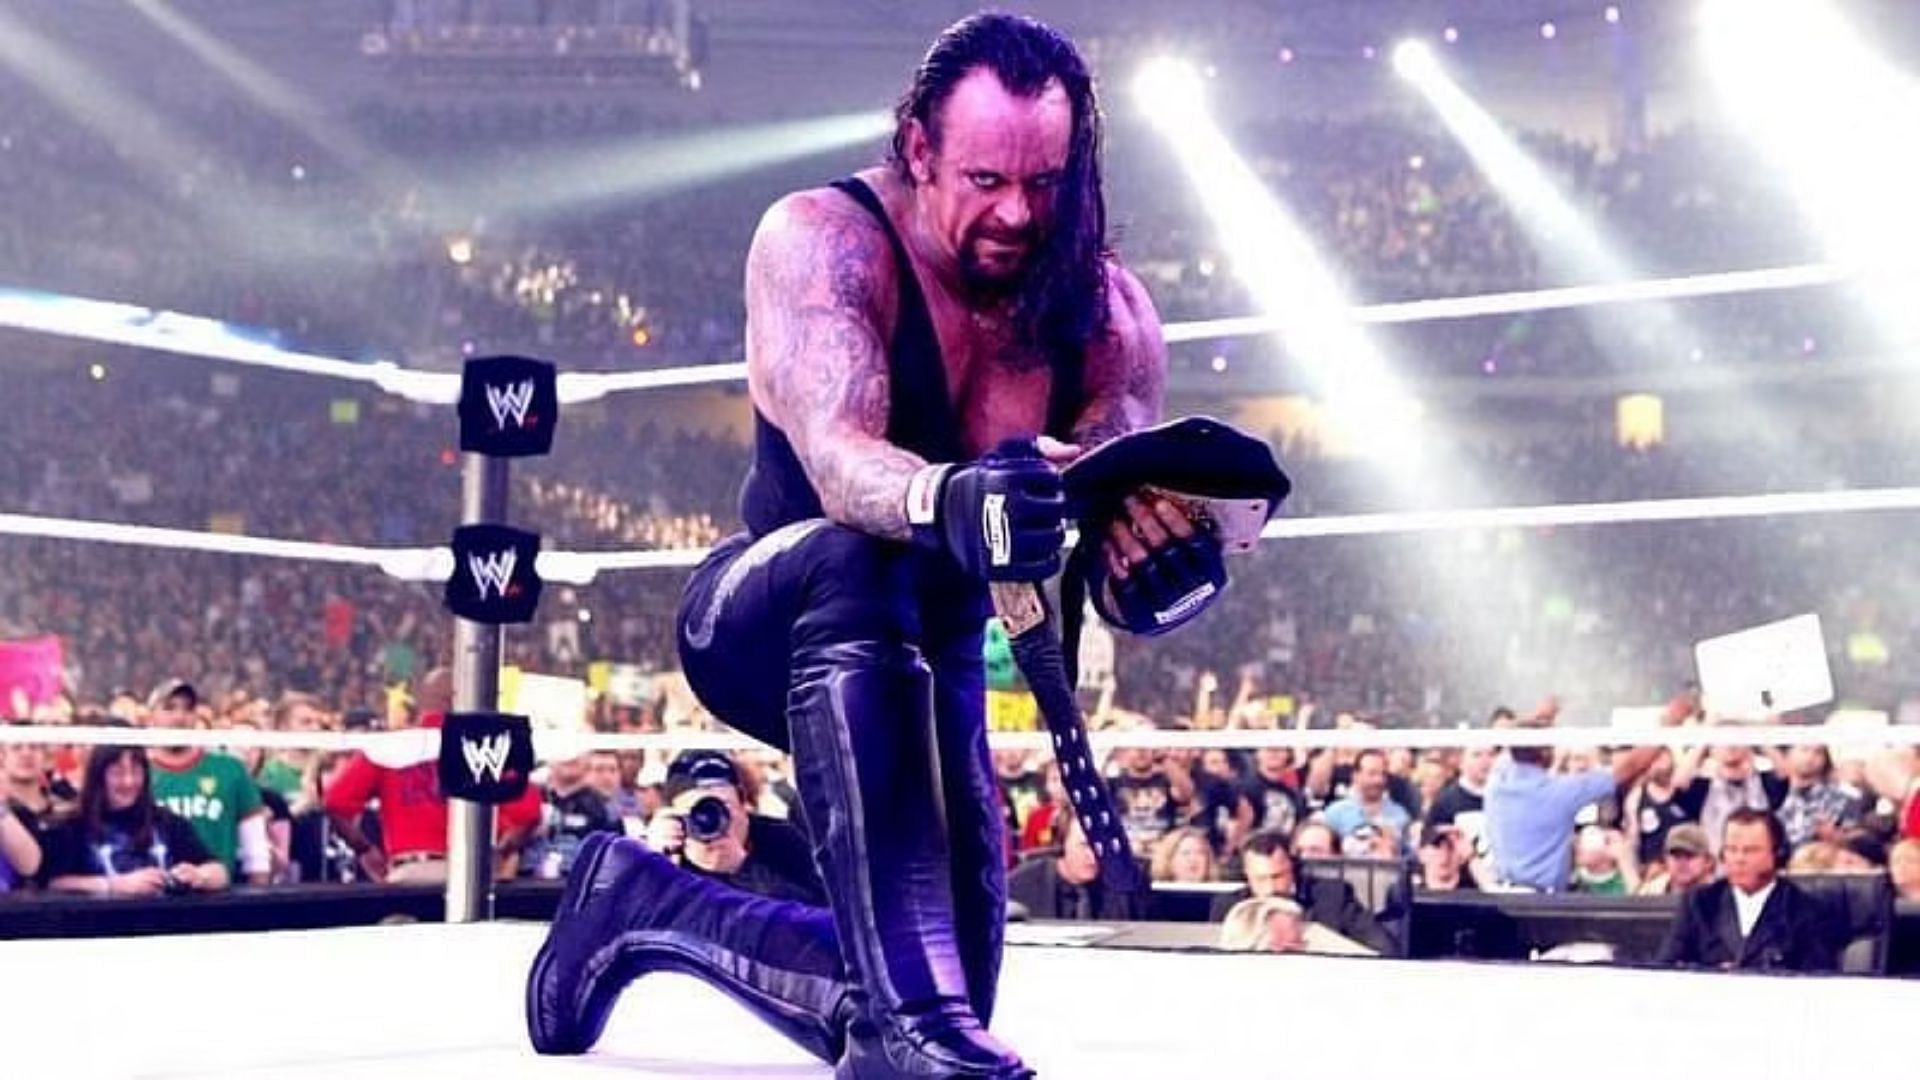 The Undertaker defeated Batista at WrestleMania 23